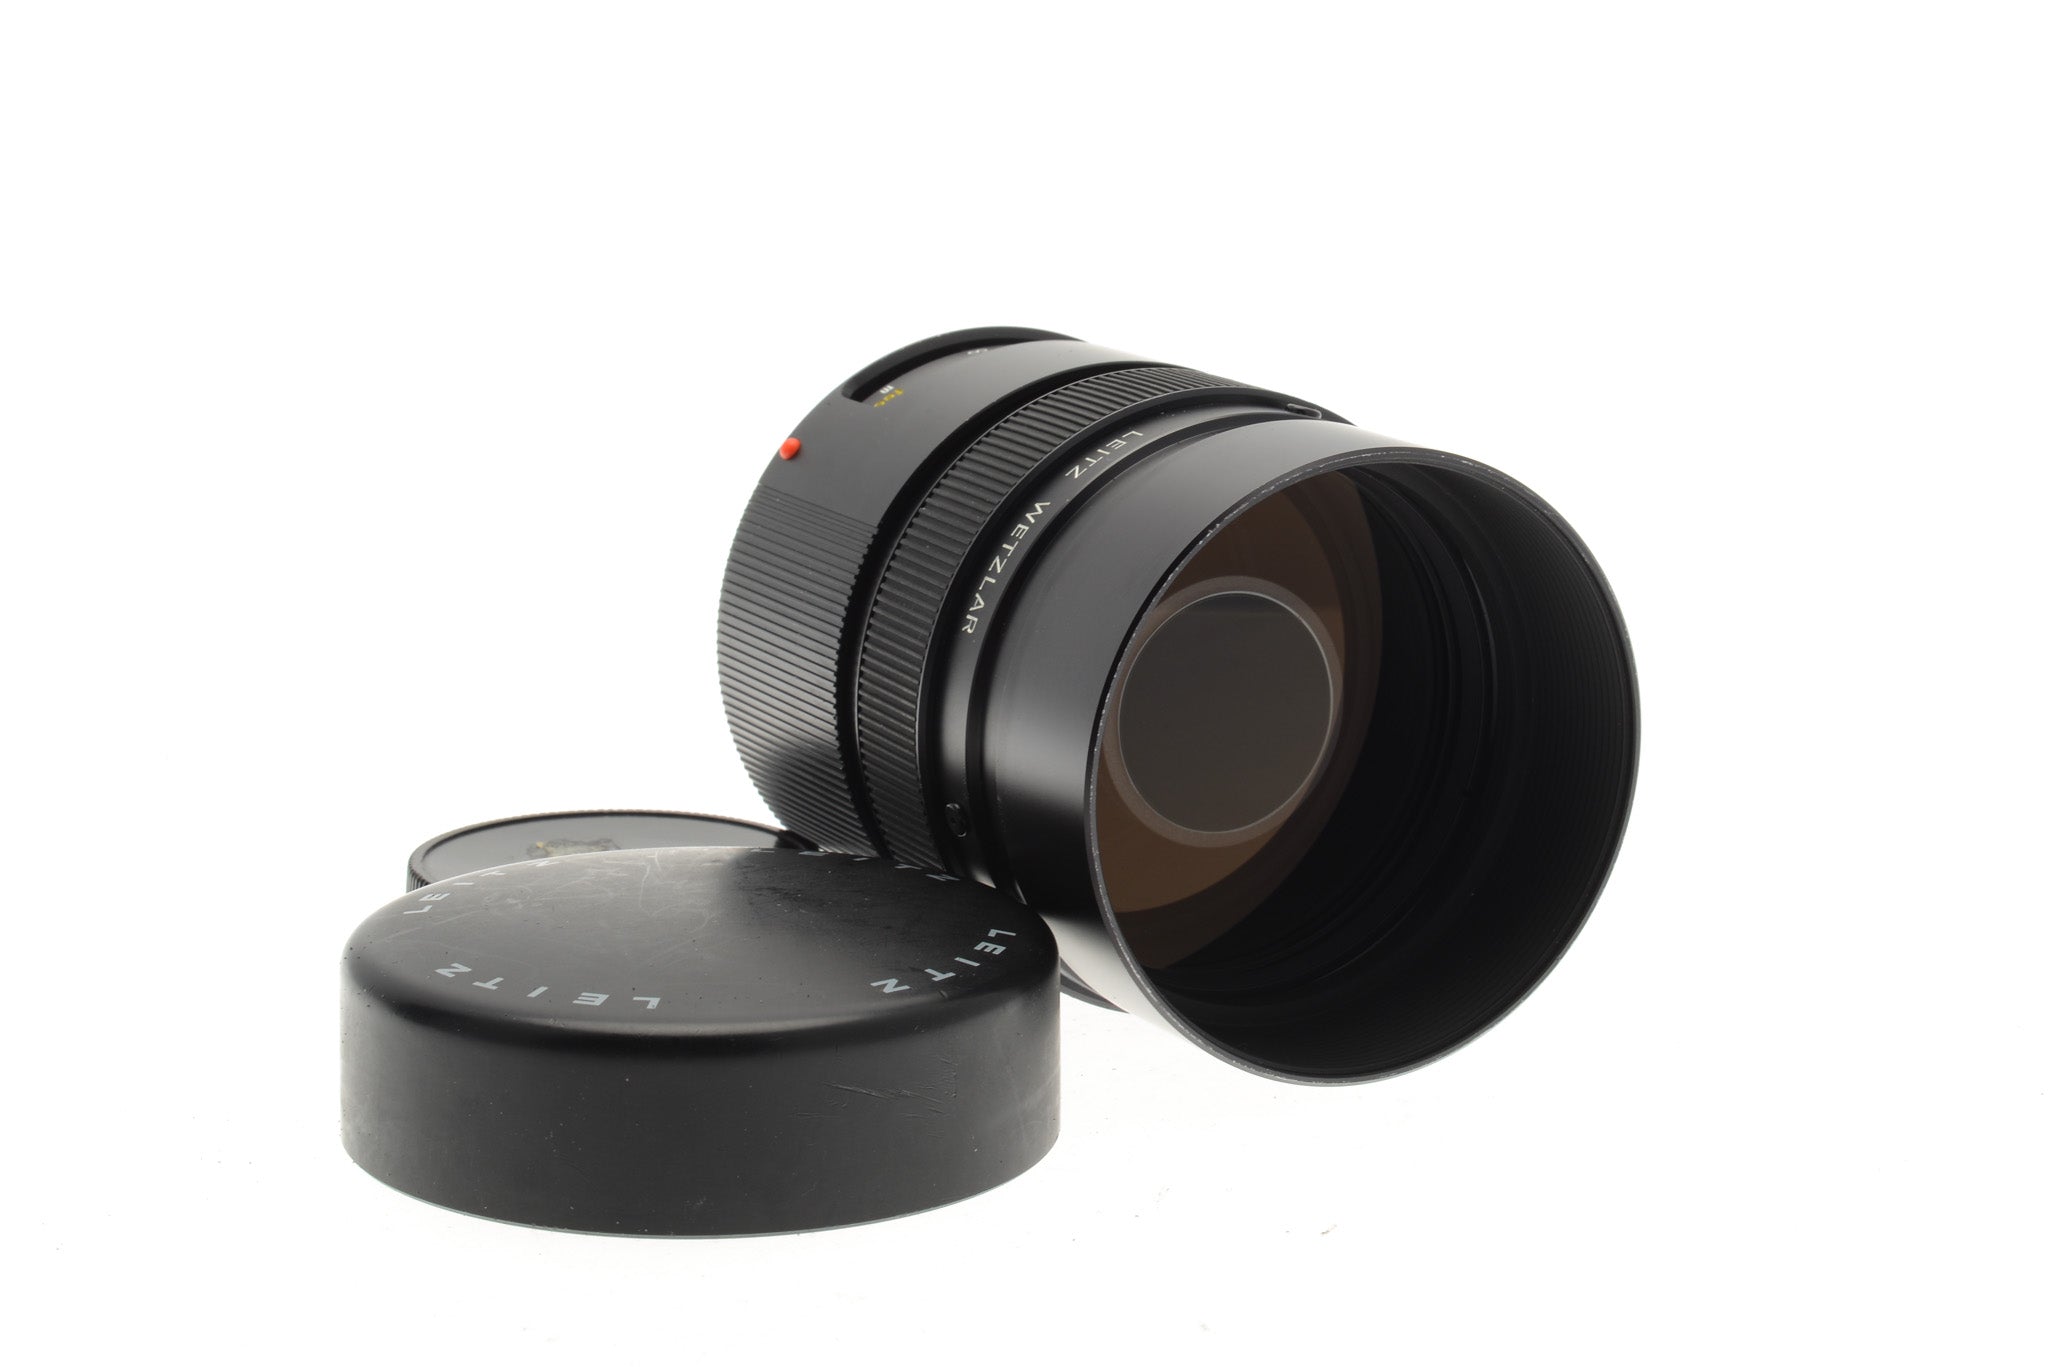 Leica 500mm f8 MR-Telyt-R – Kamerastore